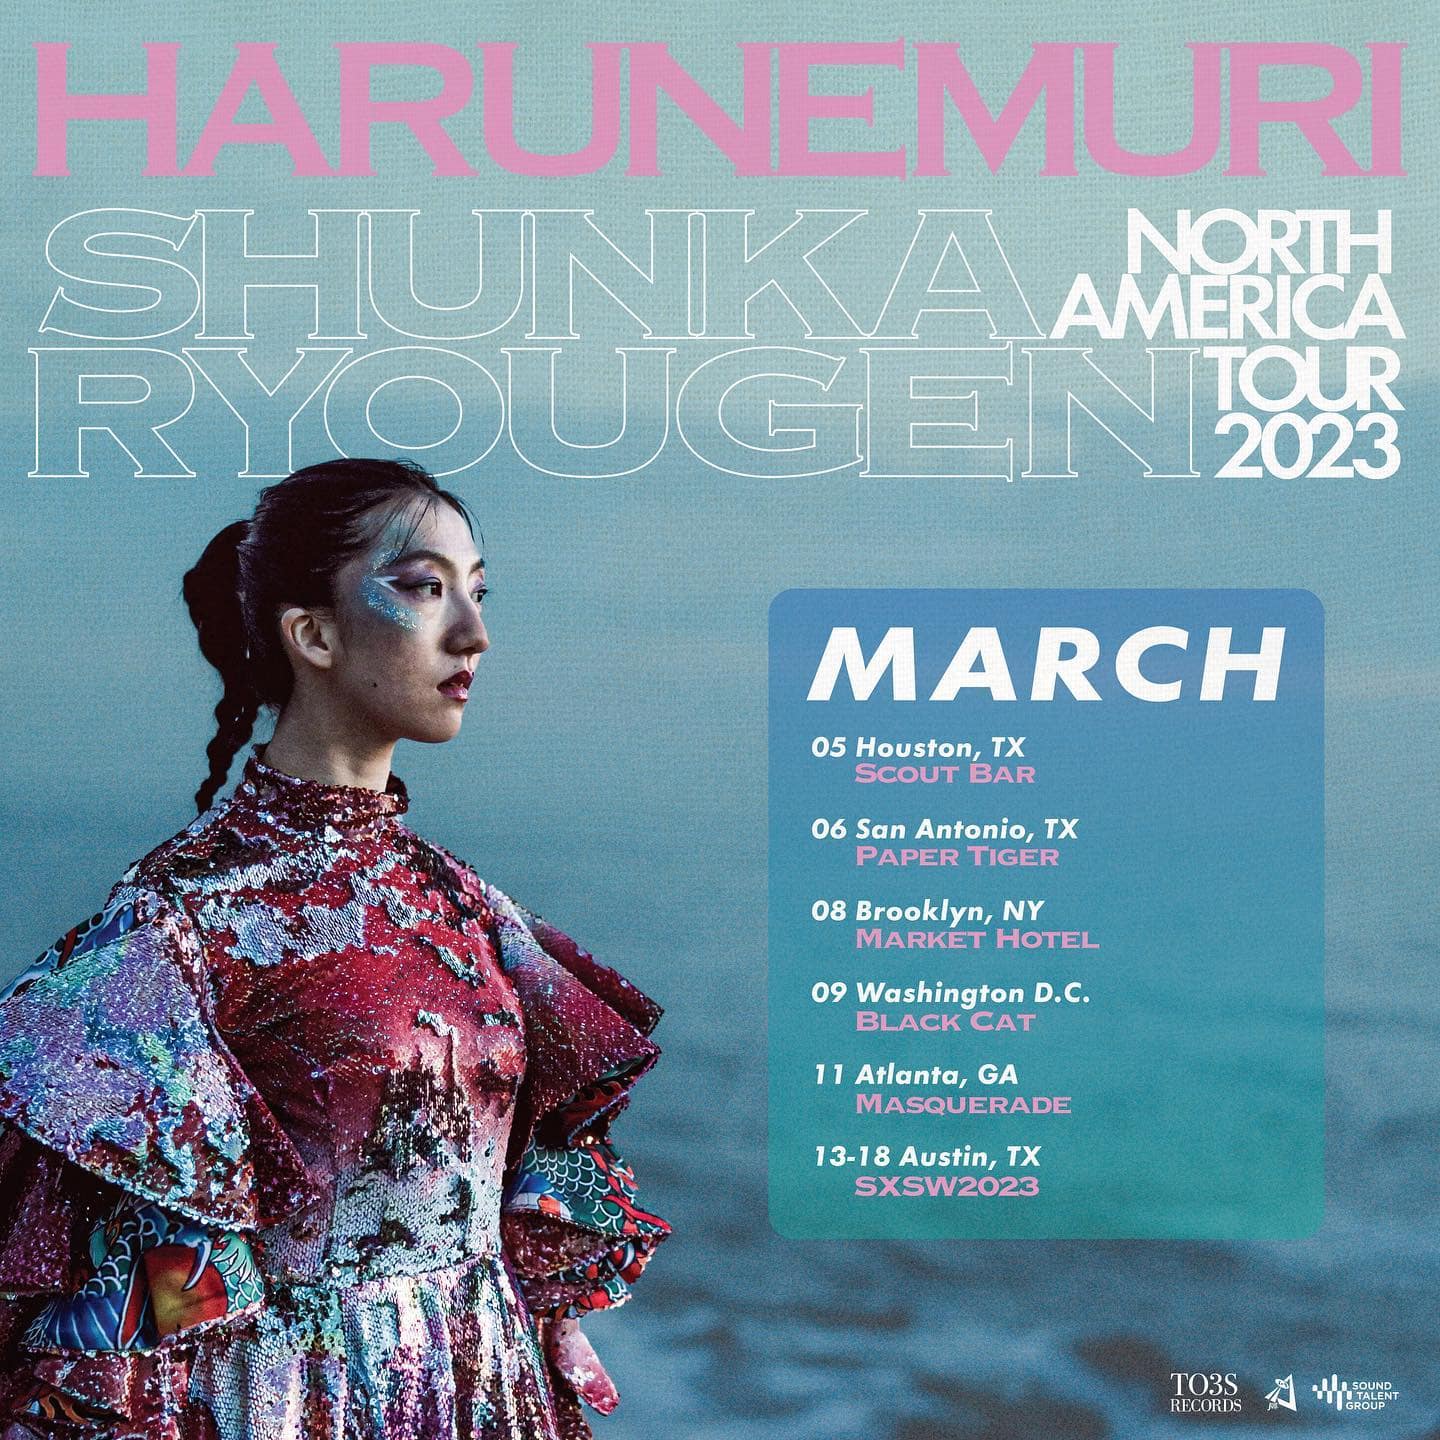 Haru Nemuri 2023 tour flyer.